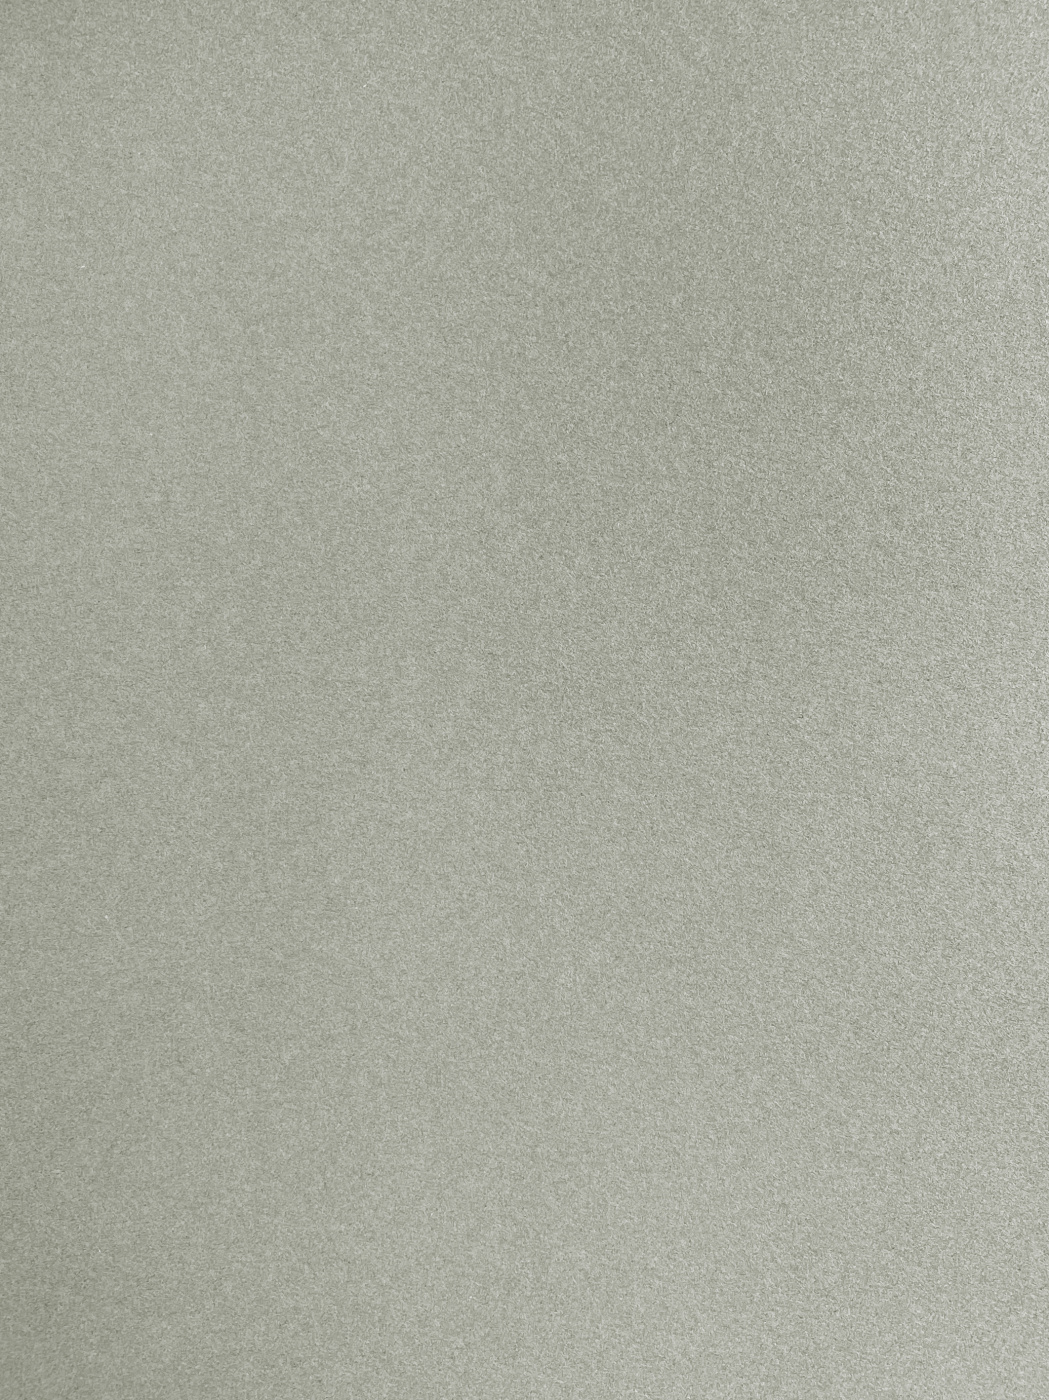 Бумага для пастели Малевичъ GrafArt А3 270 г, серая теплая зажим для бумаги с наждаком для заточки карандаша малевичъ